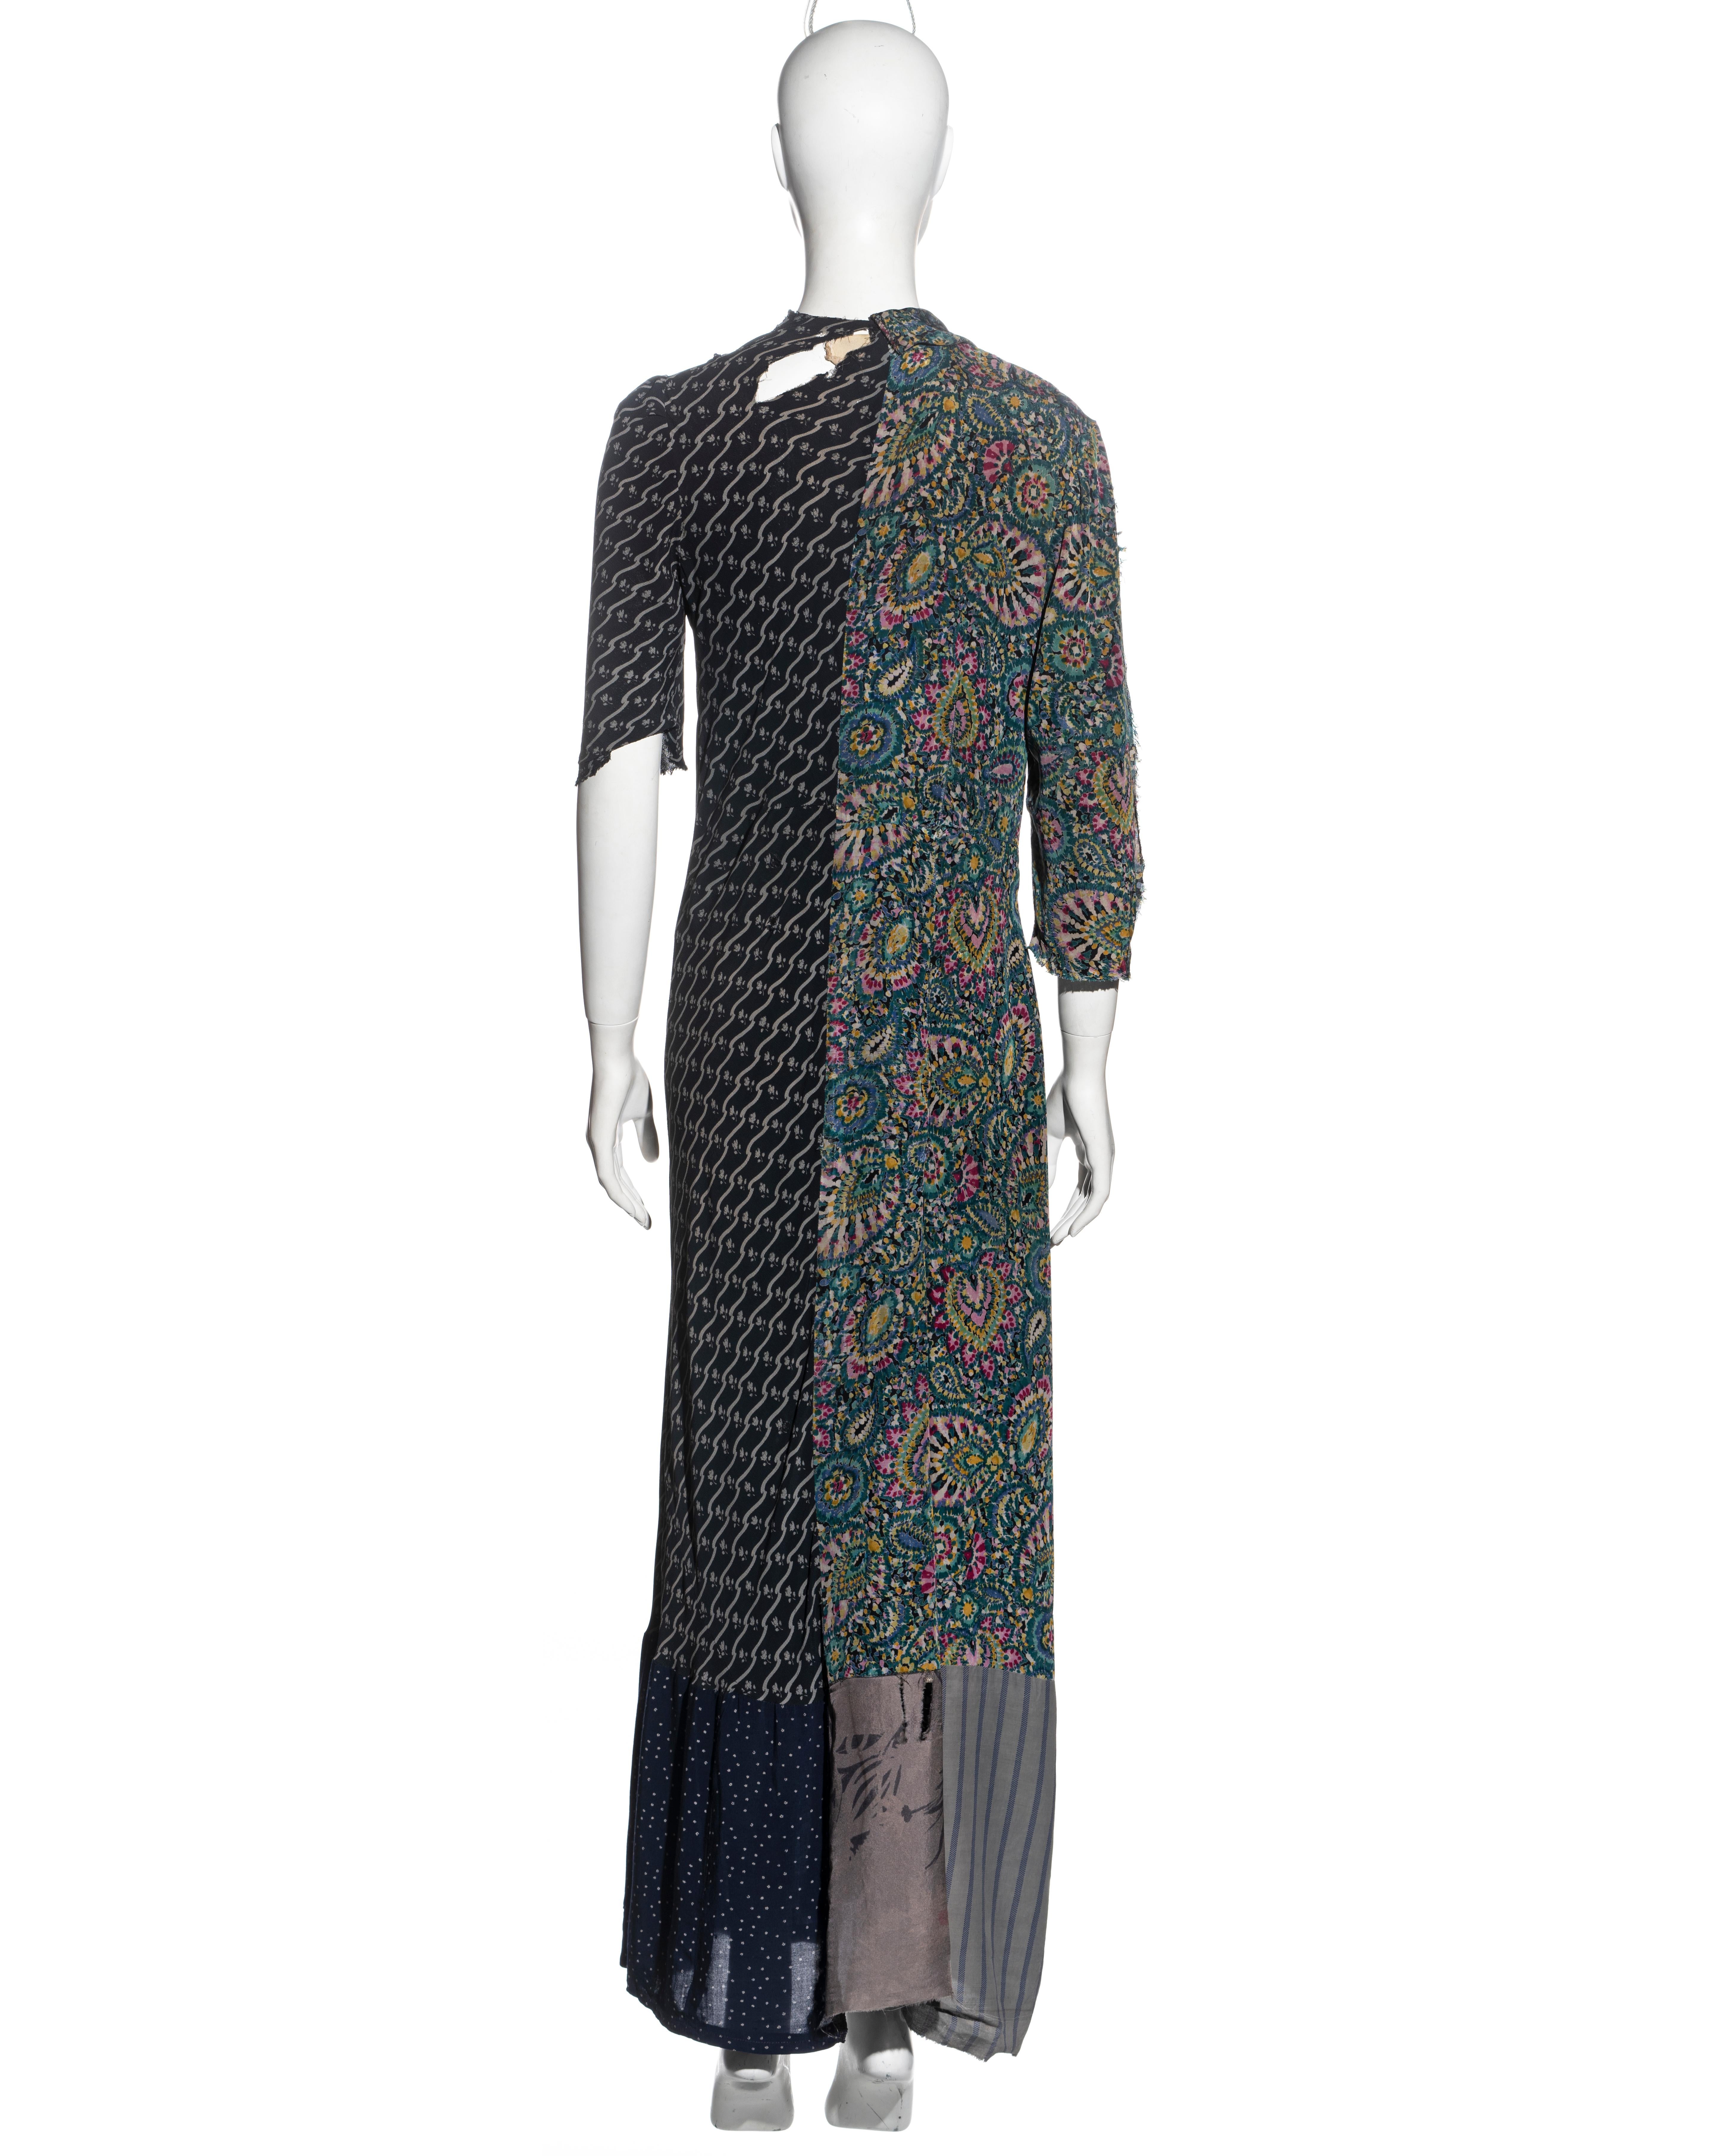 Martin Margiela artisanal dress made from reclaimed vintage dresses, fw 1993 For Sale 4